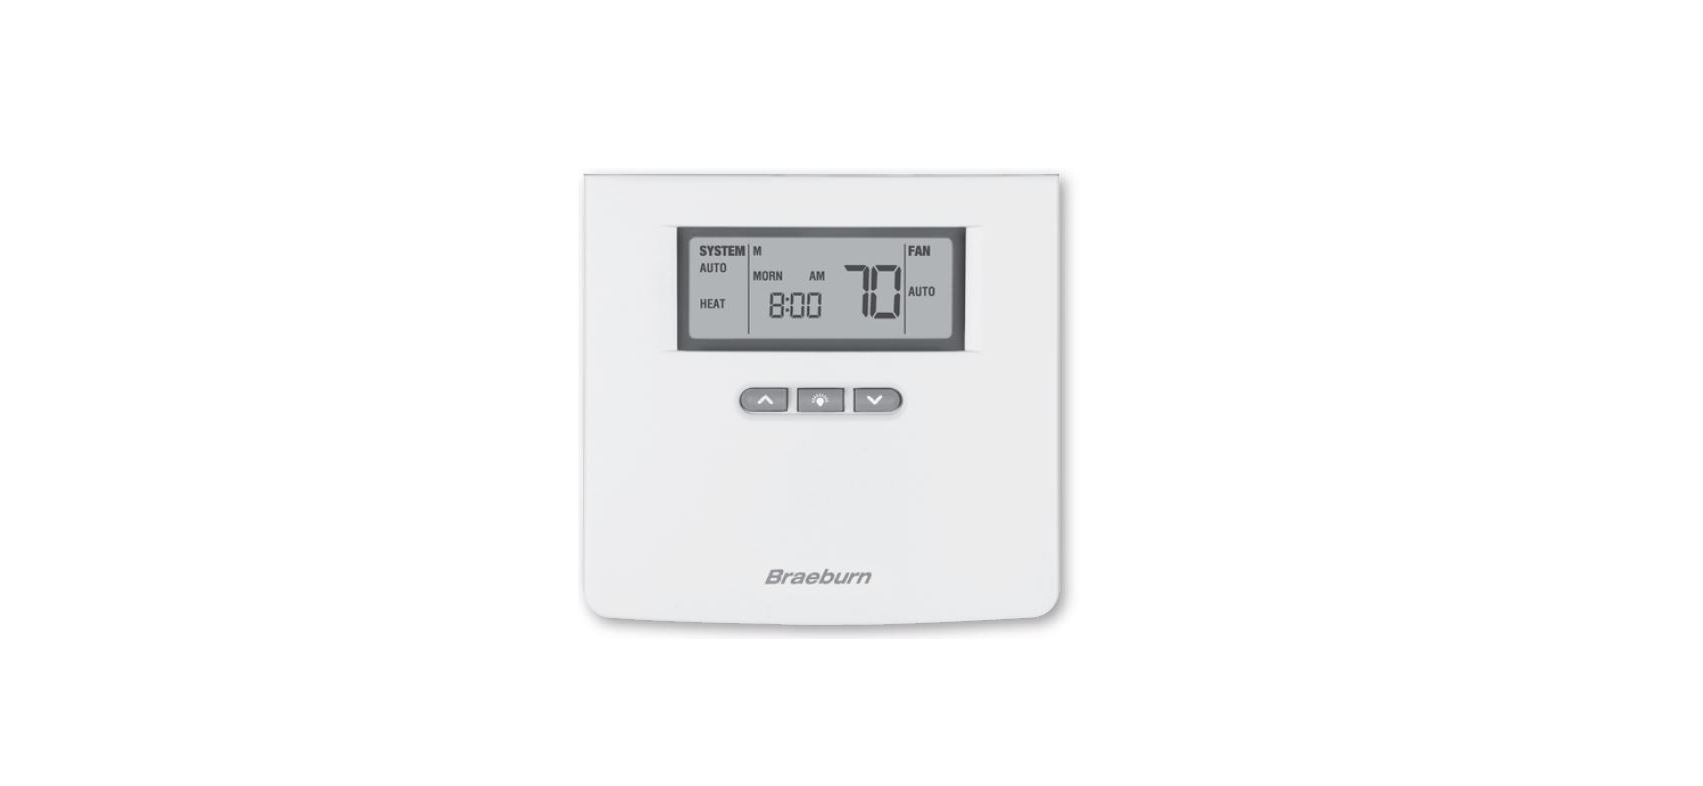 Braeburn 5300 Universal Thermostat User Manual